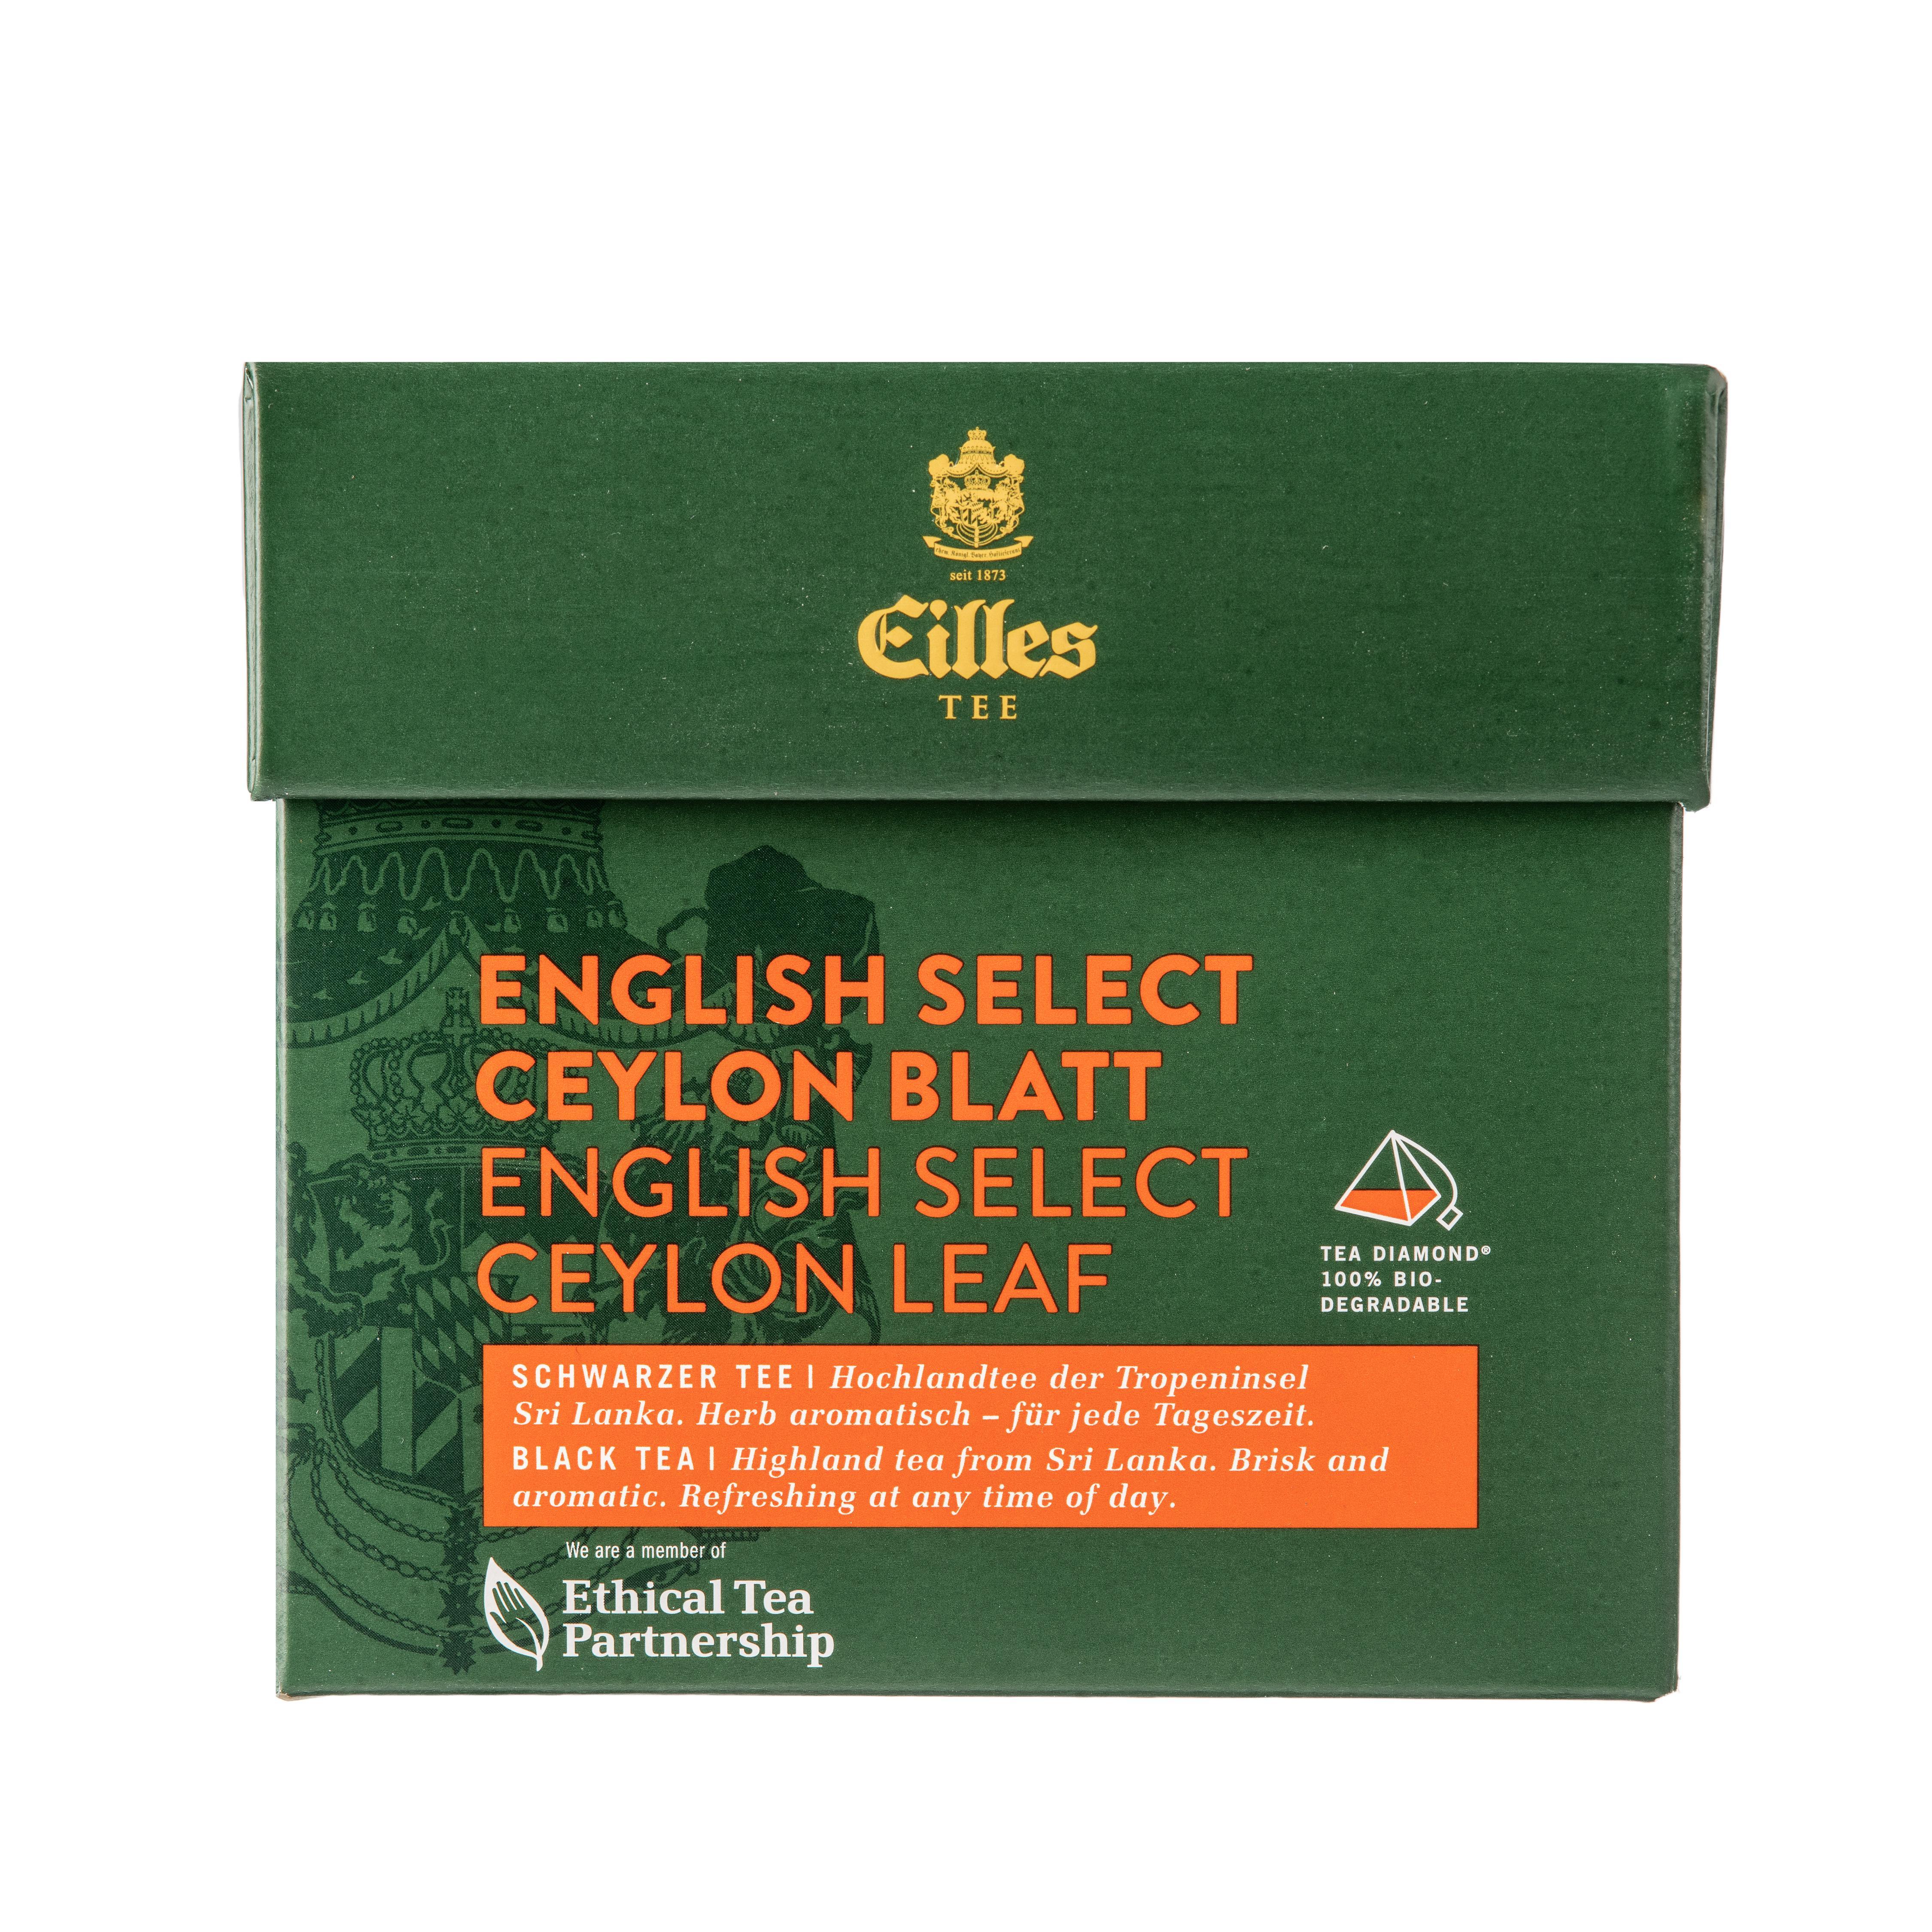 Eilles Tea Diamond English Select Ceylon Orange Pekoe Tee